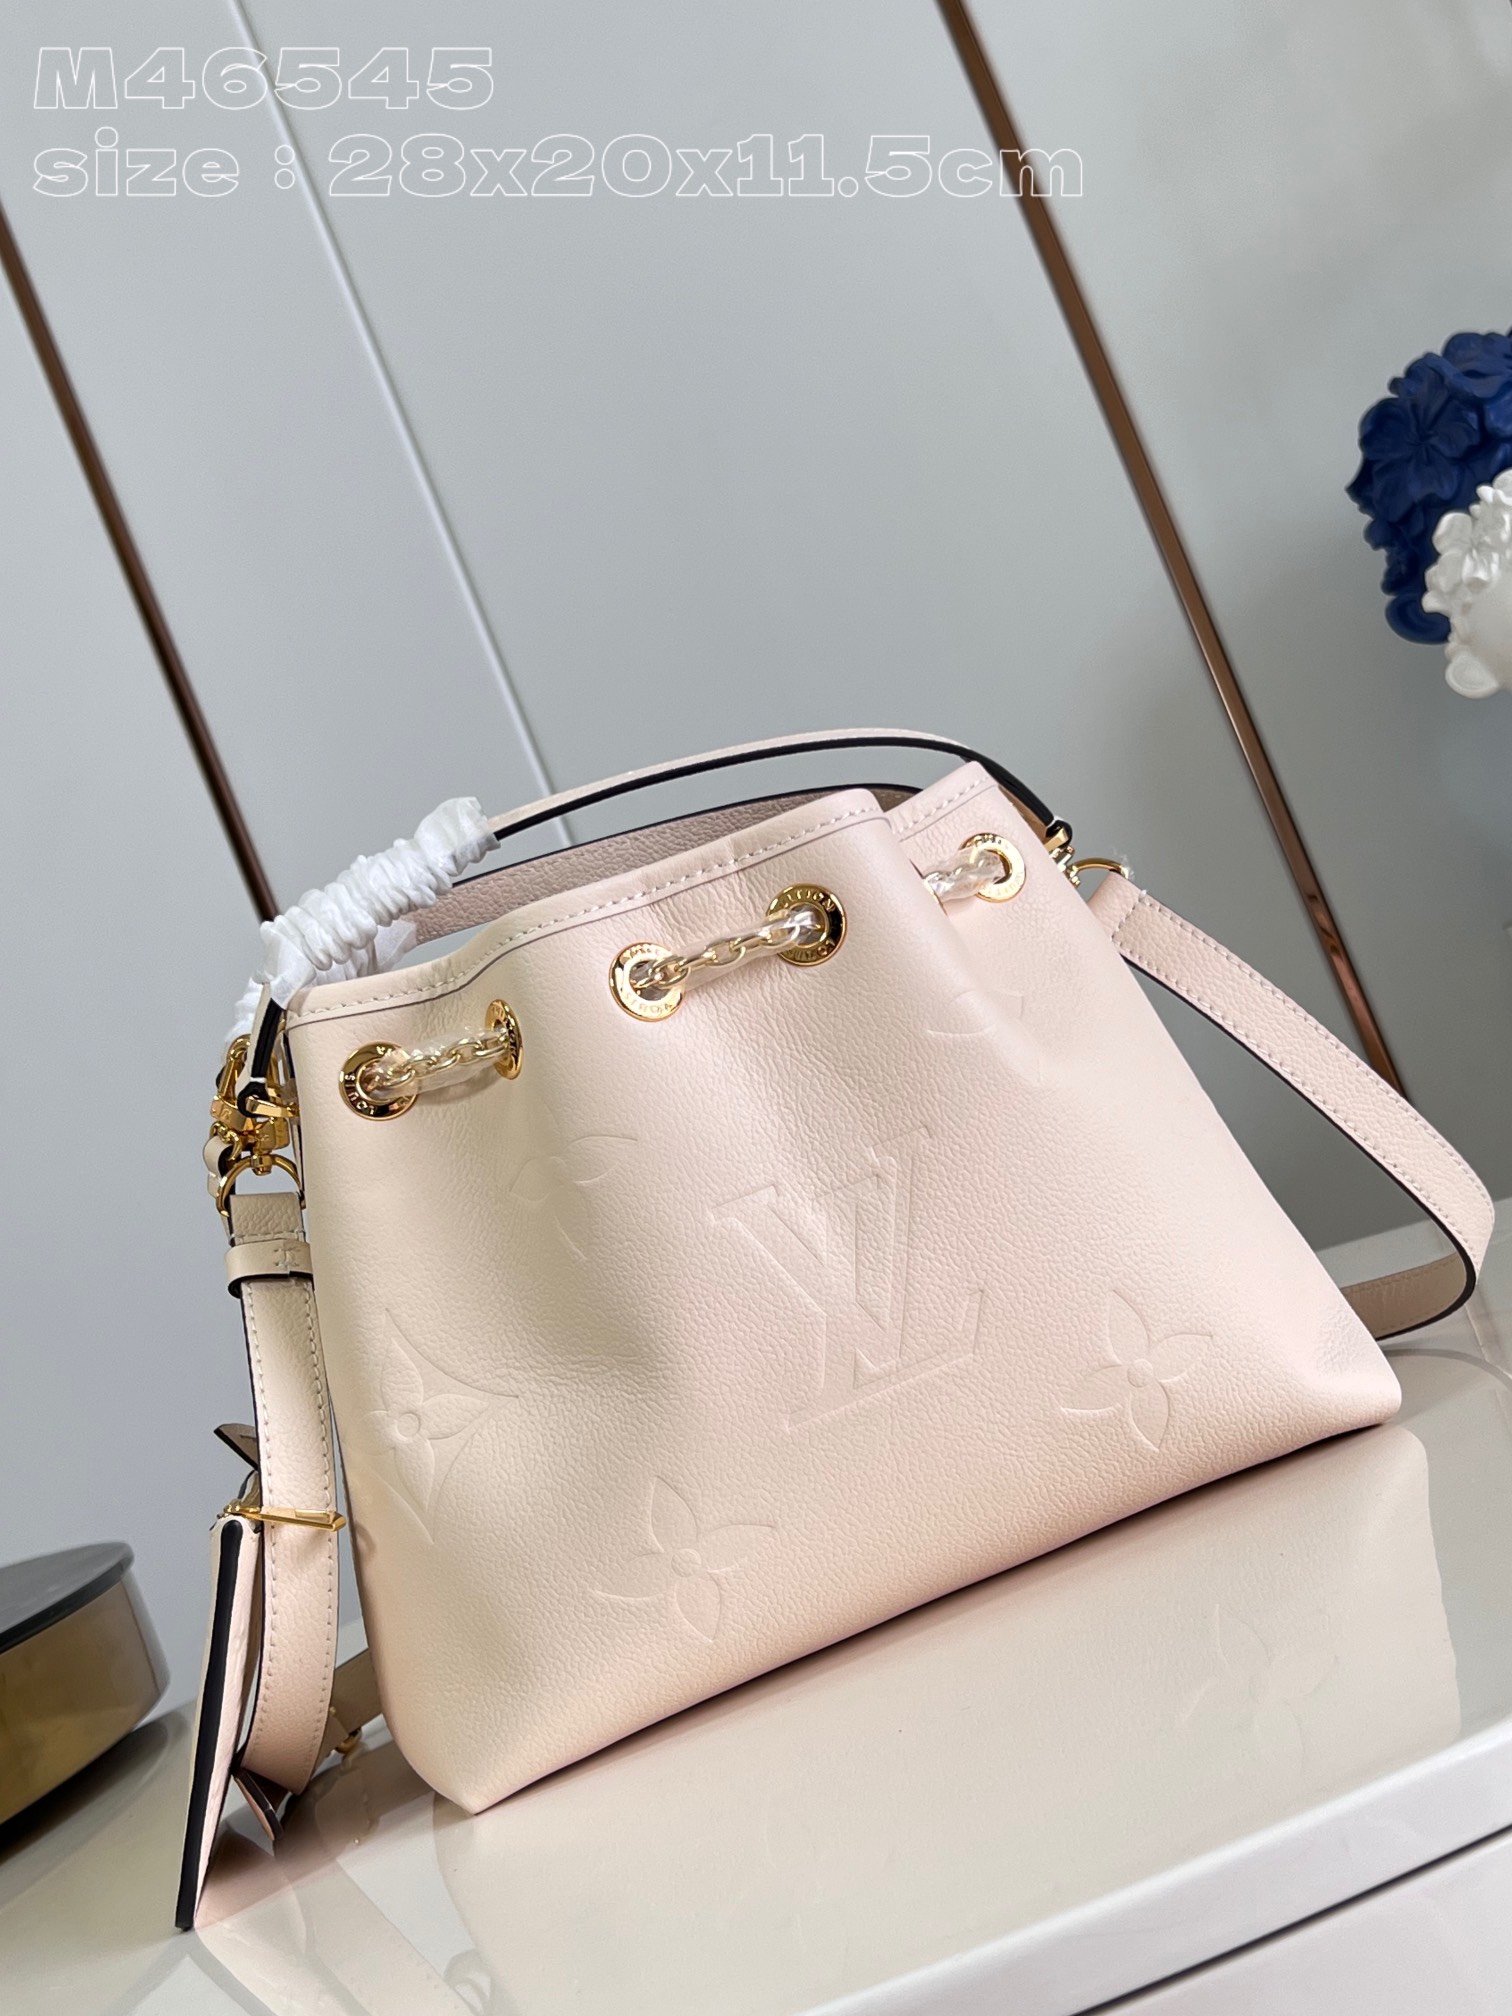 Louis Vuitton Bags Handbags White Empreinte​ Fashion M46545